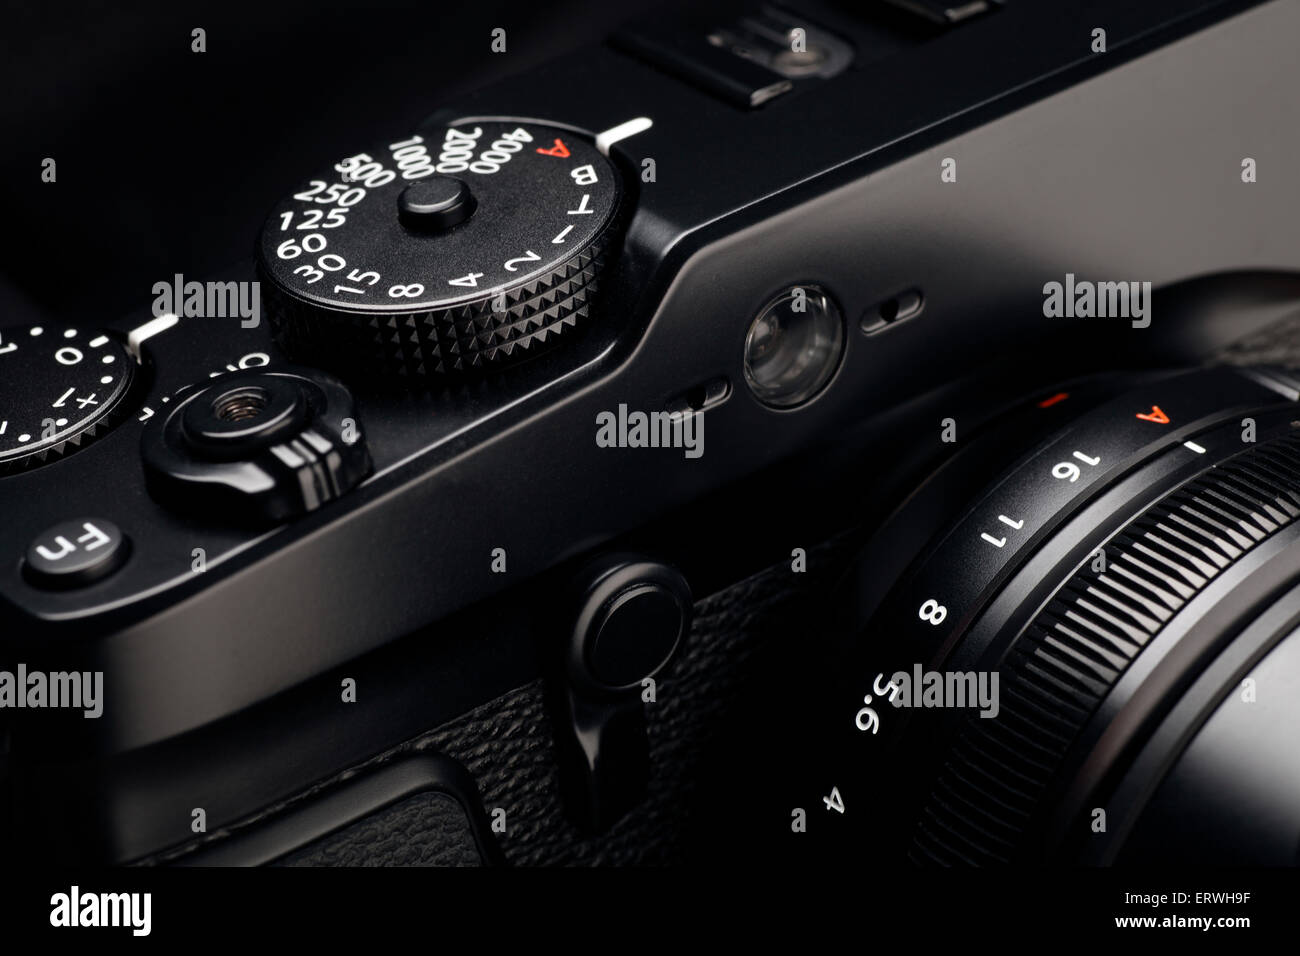 Fujifilm X-pro1 mirrorless camera Stock Photo